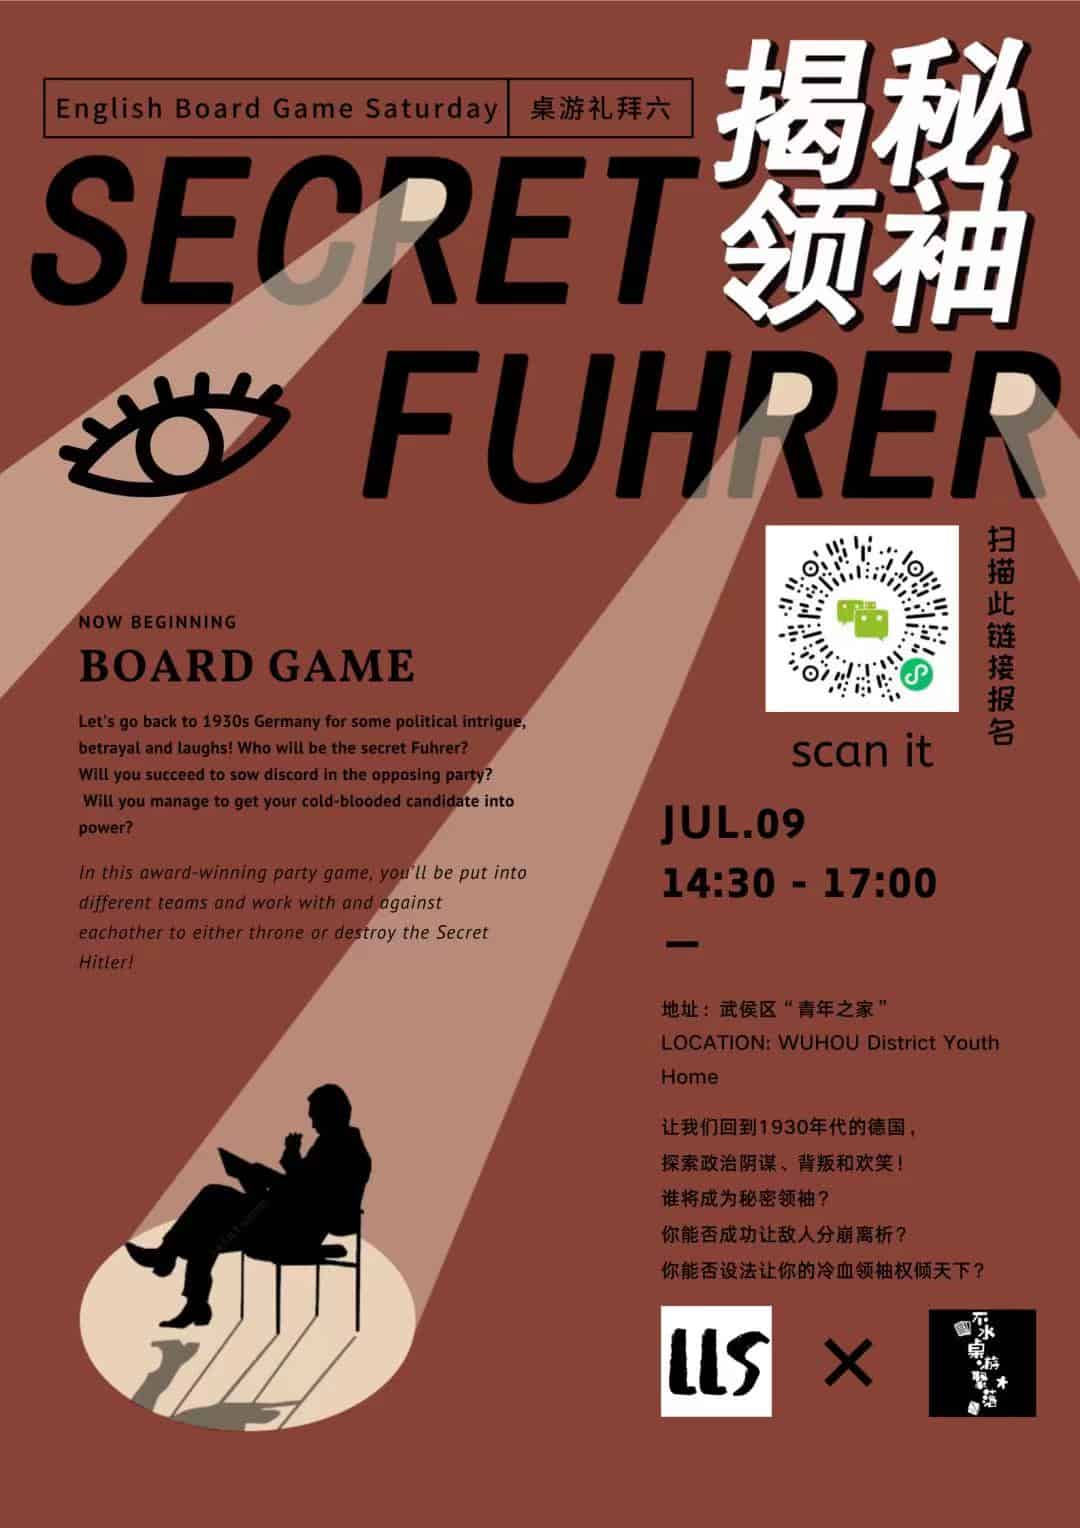 English Board Game Secret Fuhrer chengdu expat 1